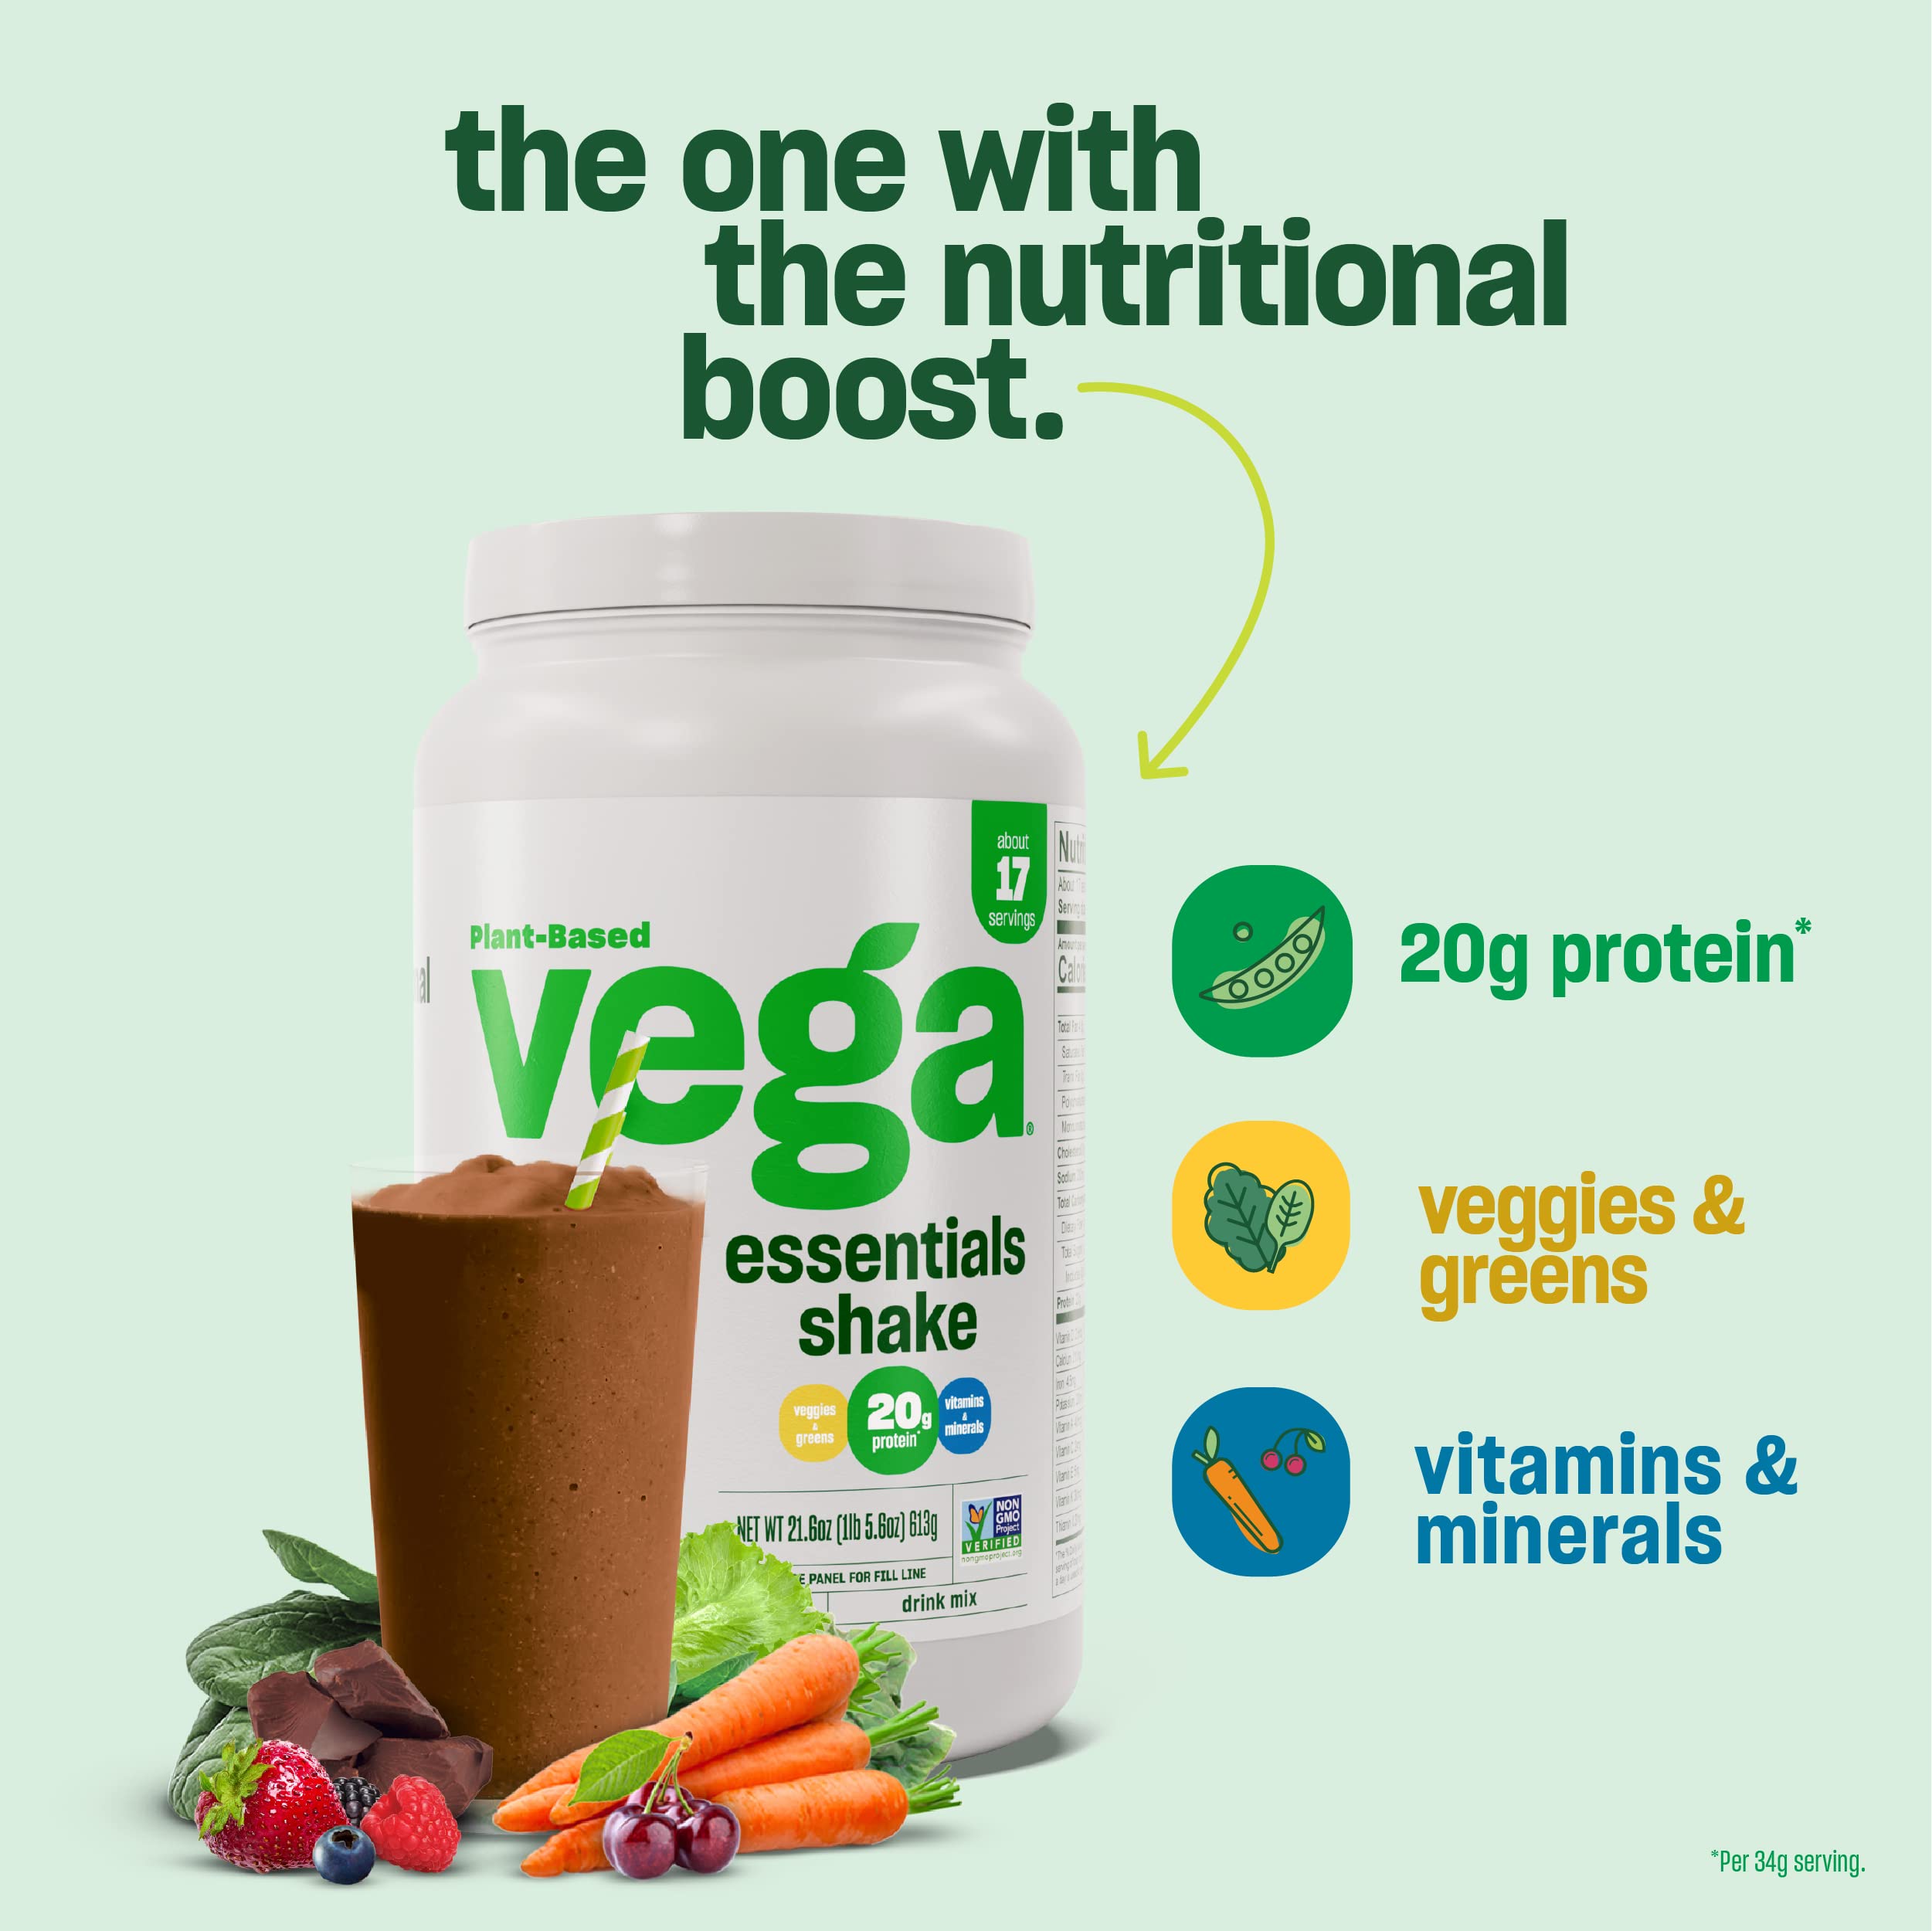 Vega Essentials Plant Based Protein Powder, Mocha - Vegan, Superfood, Vitamins, Antioxidants, Keto, Low Carb, Dairy Free, Gluten Free, Pea Protein for Women & Men, 1.4 lbs (Packaging May Vary)